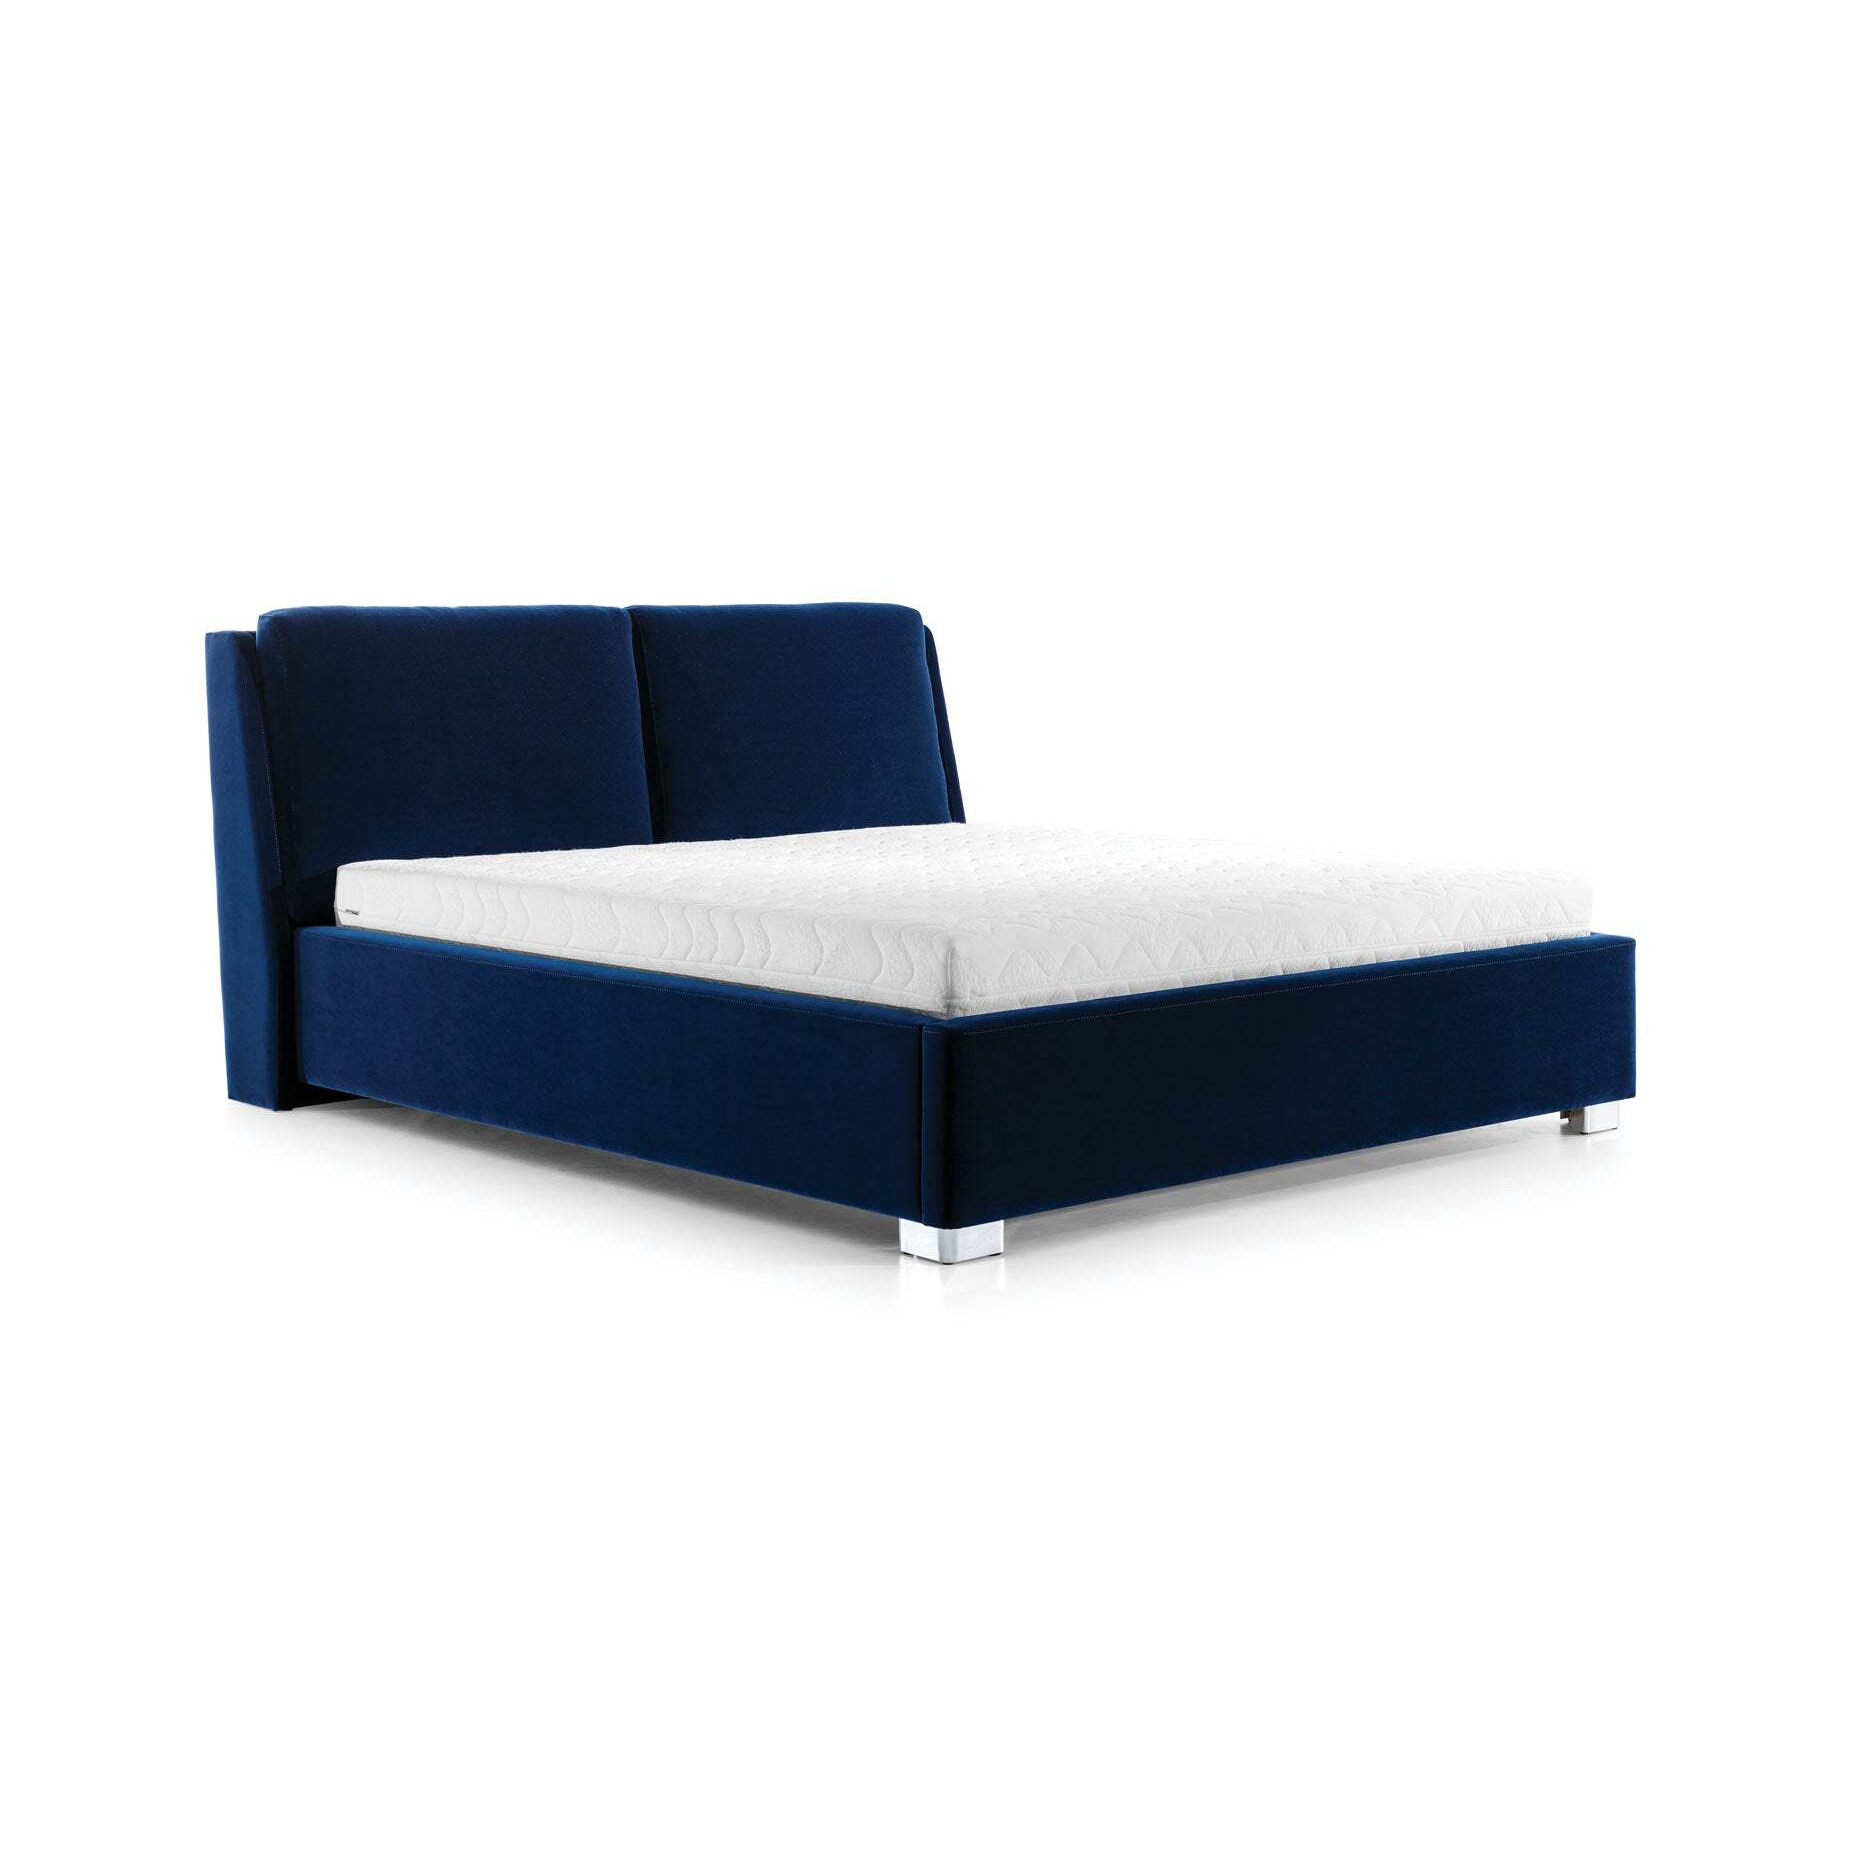 Monaco Upholstered Bed - 160 x 200cm - image 1